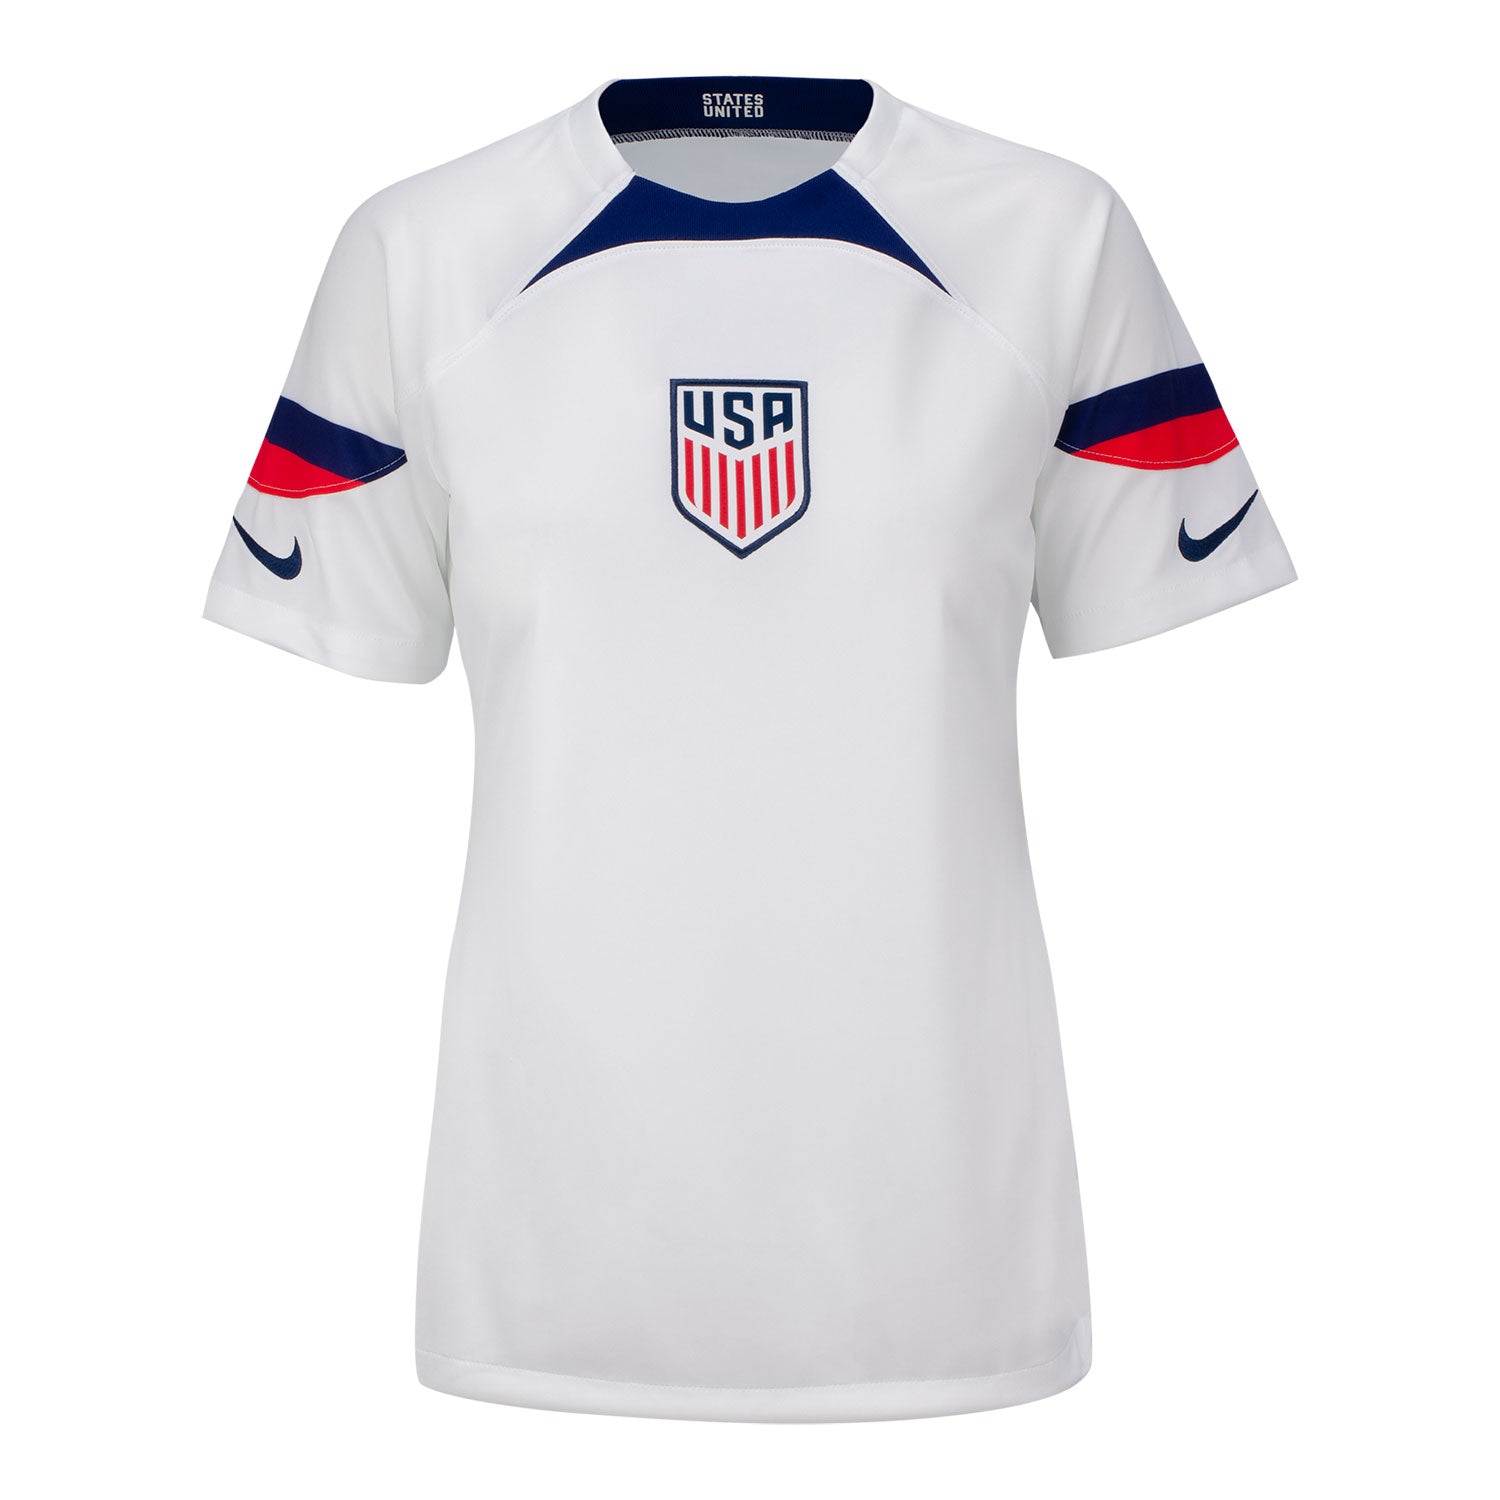 Nike Soccer WWC23 USA Stadium unisex home jersey in white